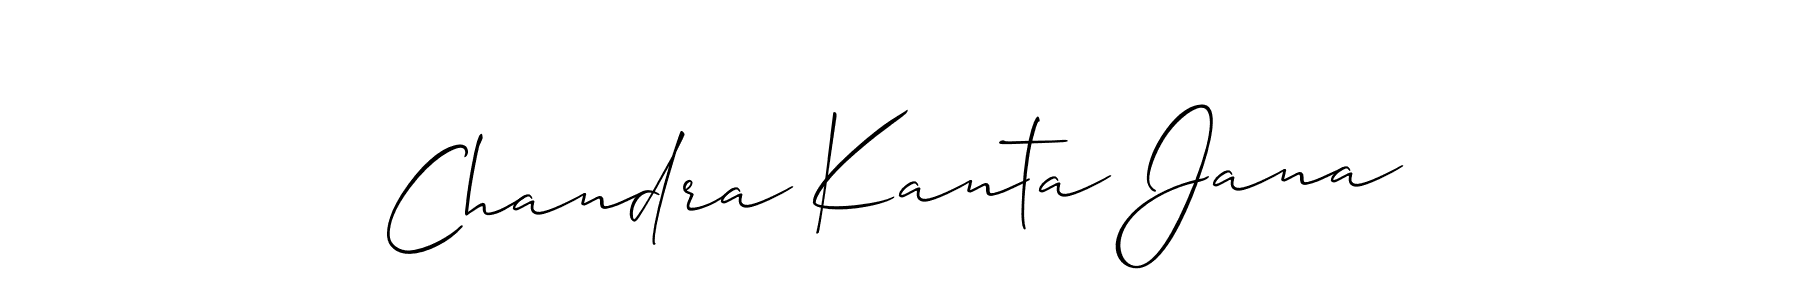 87+ Chandra Kanta Jana Name Signature Style Ideas | Special Electronic Sign